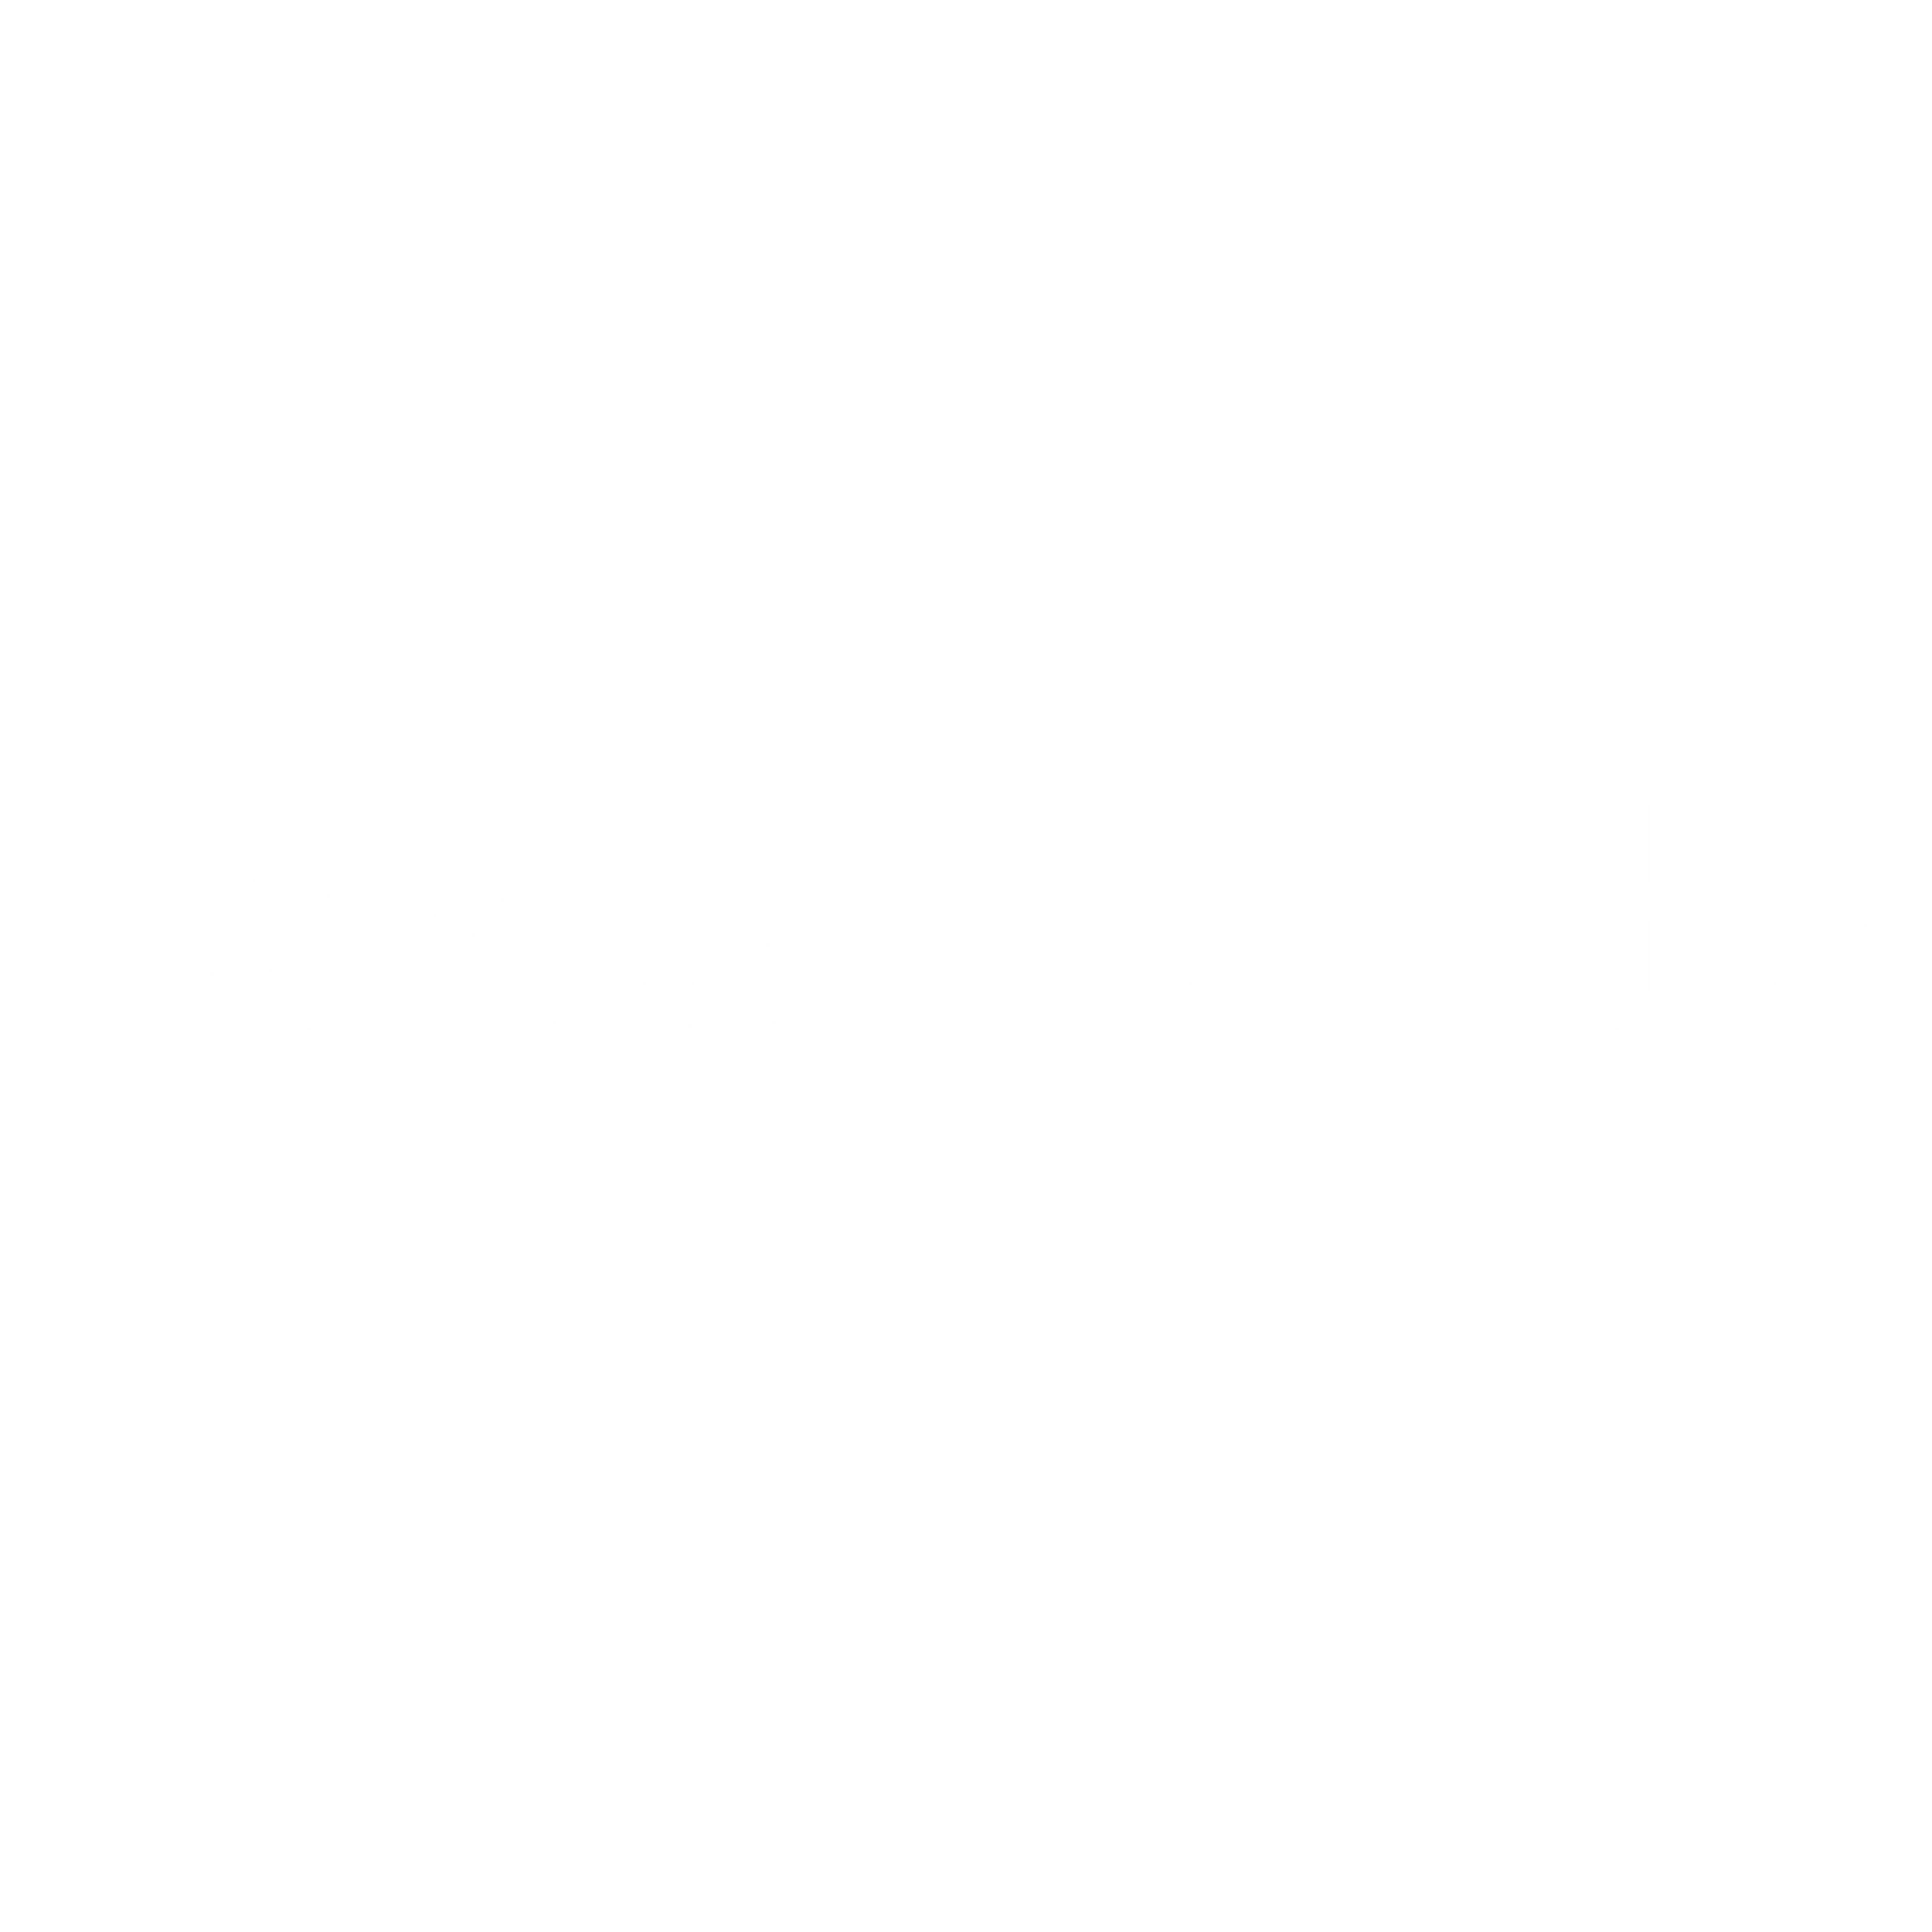 Lakeside Labs